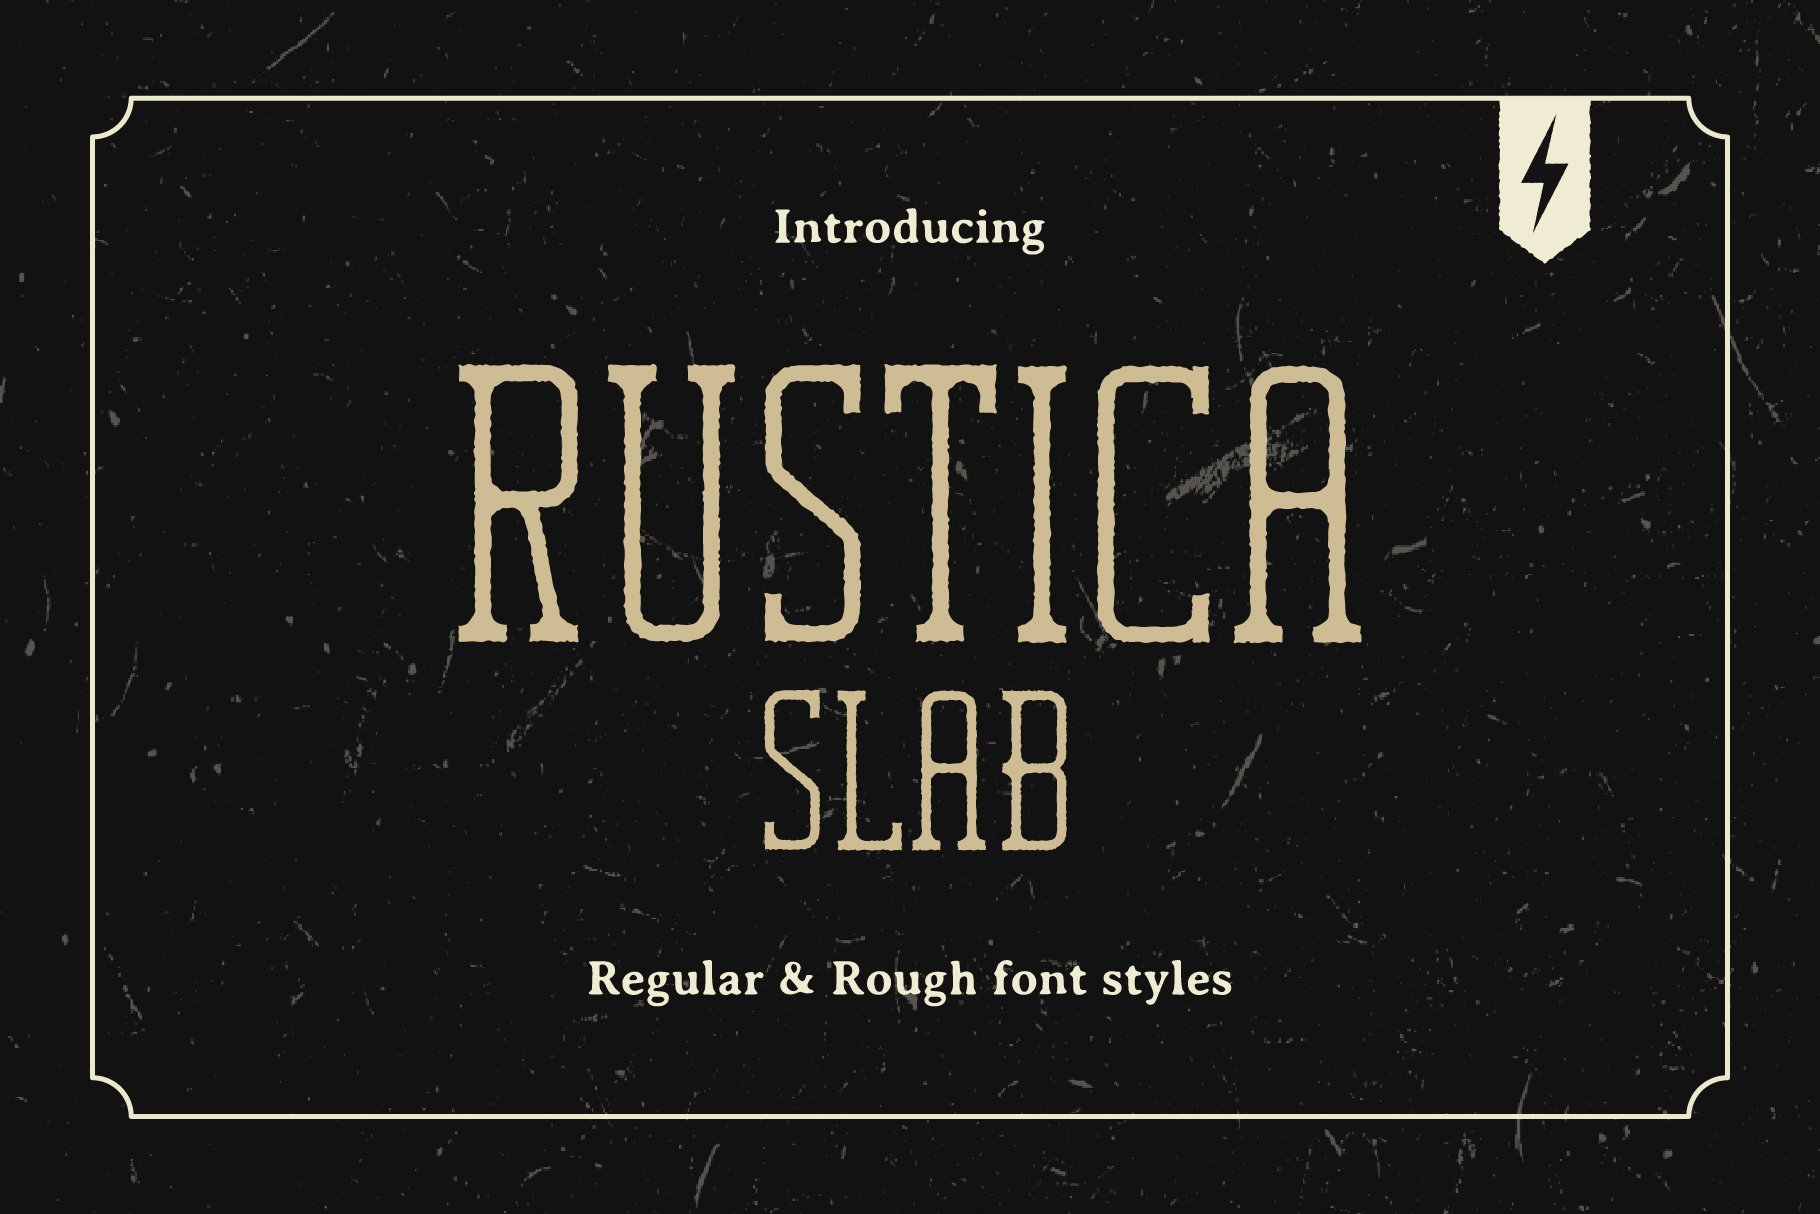 Rustica Slab Font cover image.